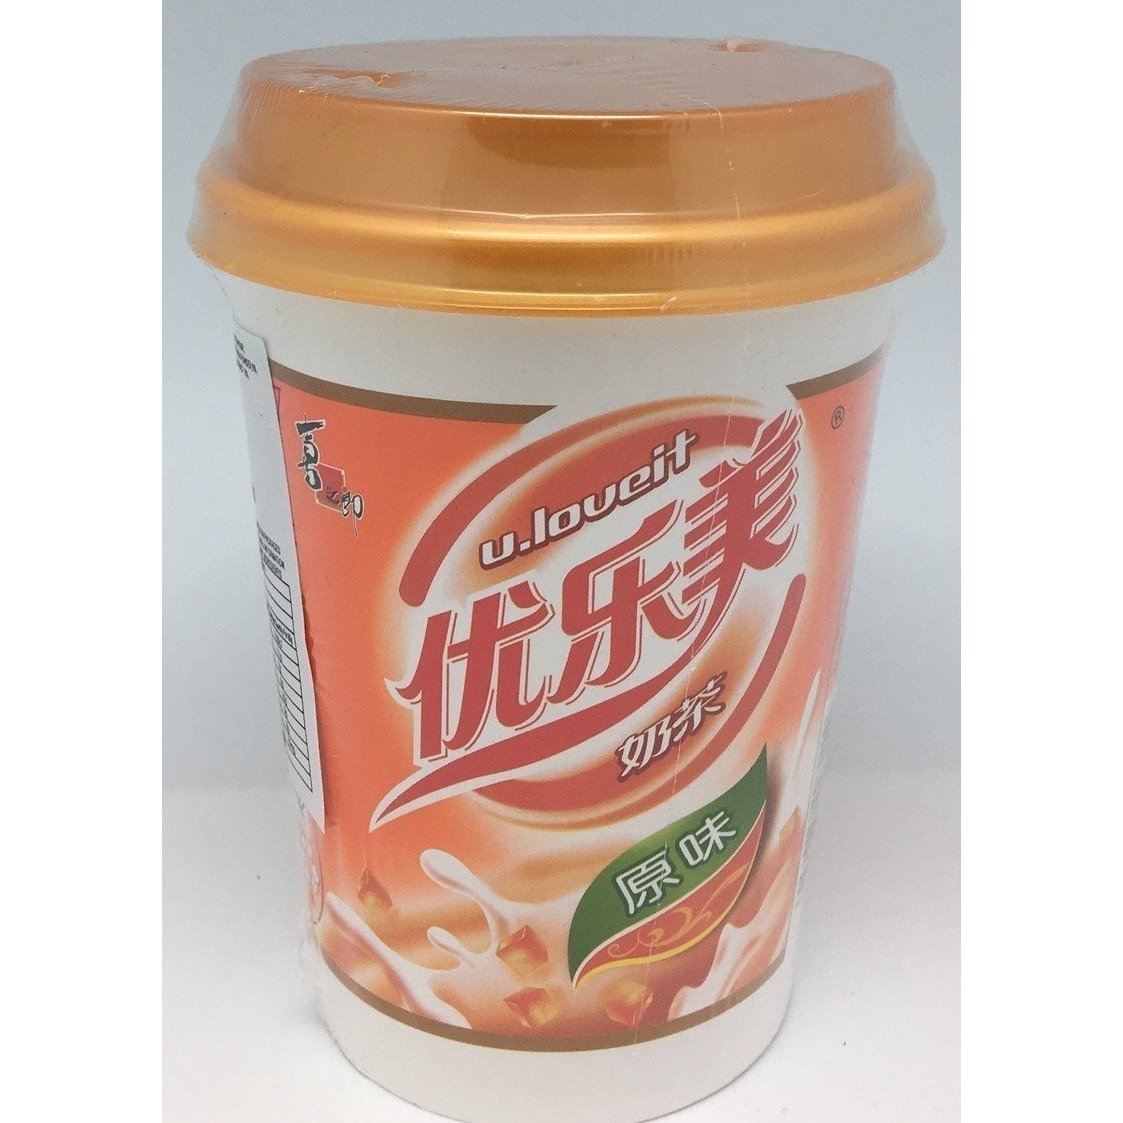 I003O U.Loueit Brand - Instant Milk Tea Drink Original Flavour 80g - 30 cup / 1 CTN - New Eastland Pty Ltd - Asian food wholesalers